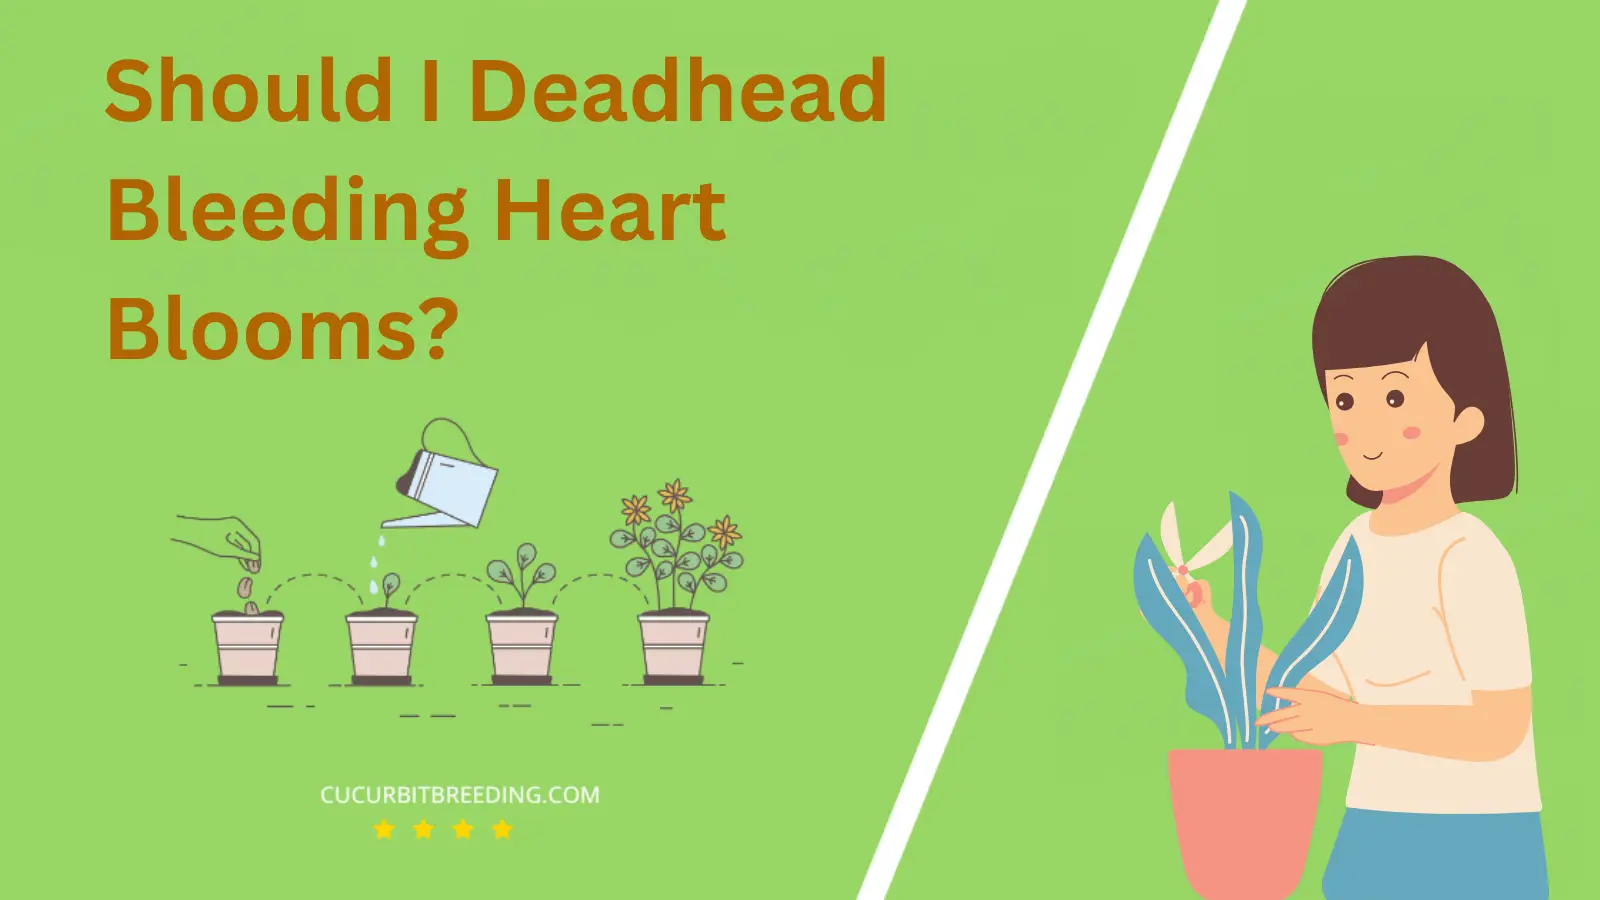 Should I Deadhead Bleeding Heart Blooms?